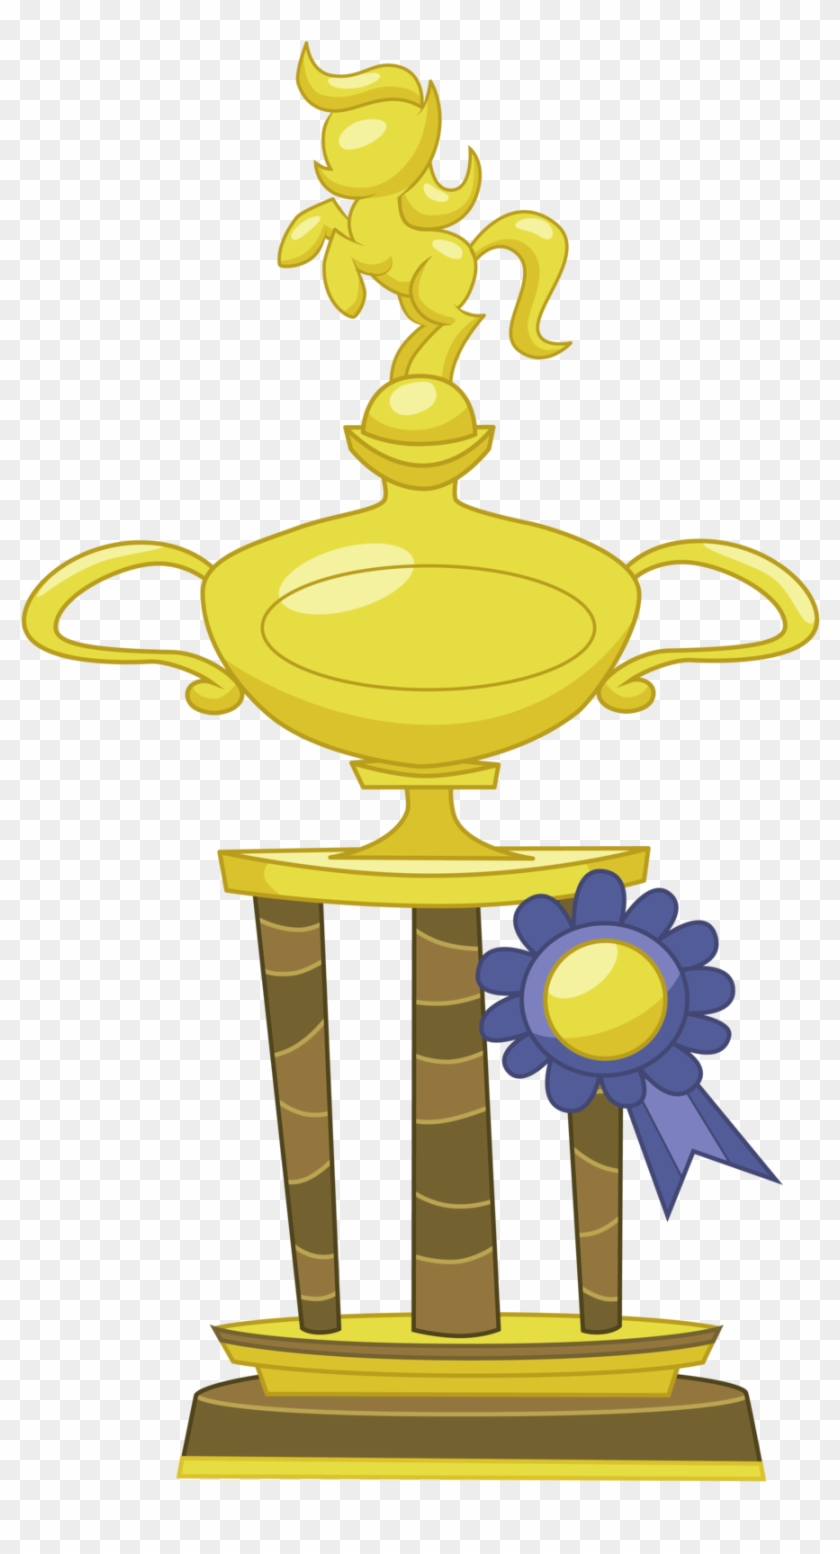 Applejack's Trophy By Vectorshy Applejack's Trophy - Mlp Fim Applejack Trophy #608946